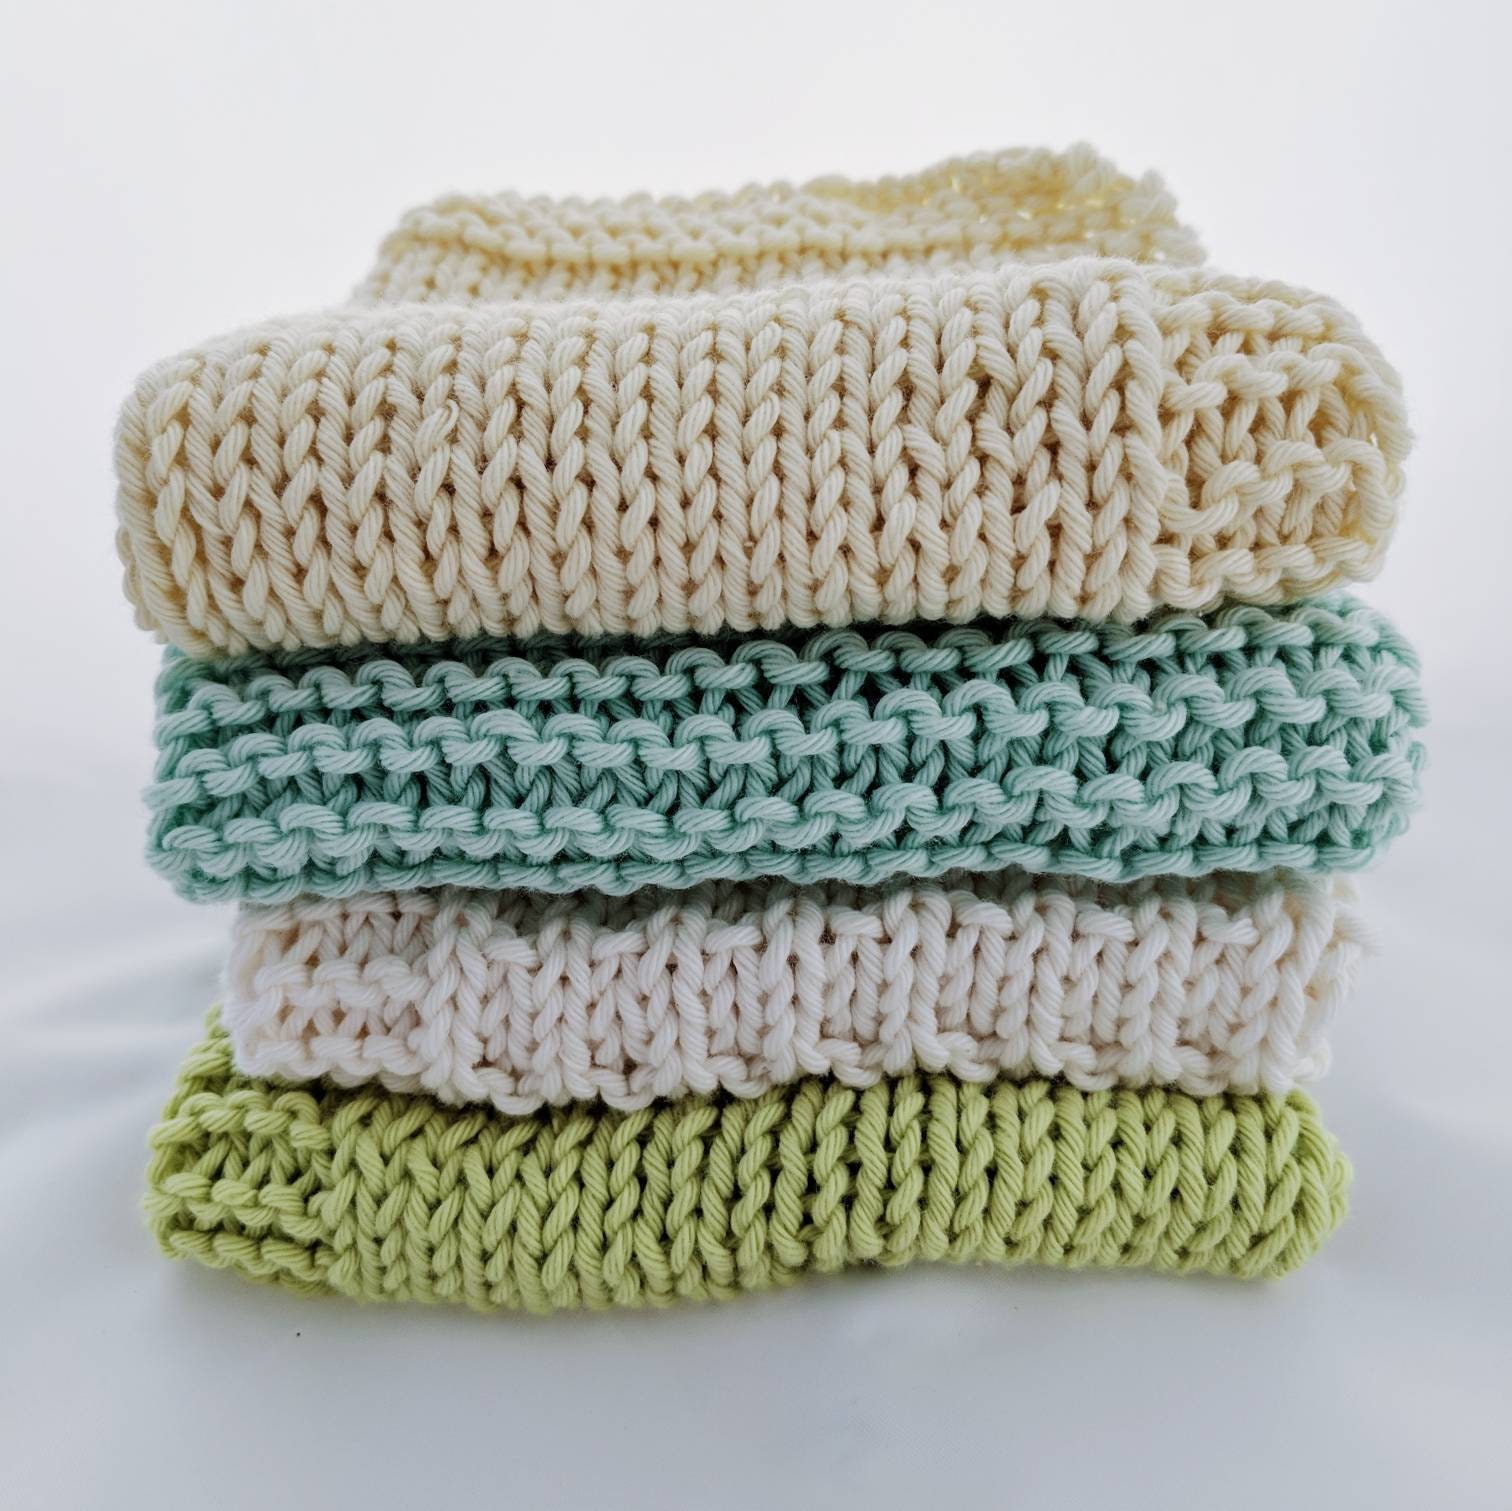 Mindfulknits Beginners Knitting Kit with Knitting Needles, Yarn Needle & 100% Cotton Knitting Yarn (4) Make Washcloths - Zen Beginners Basic Knitting